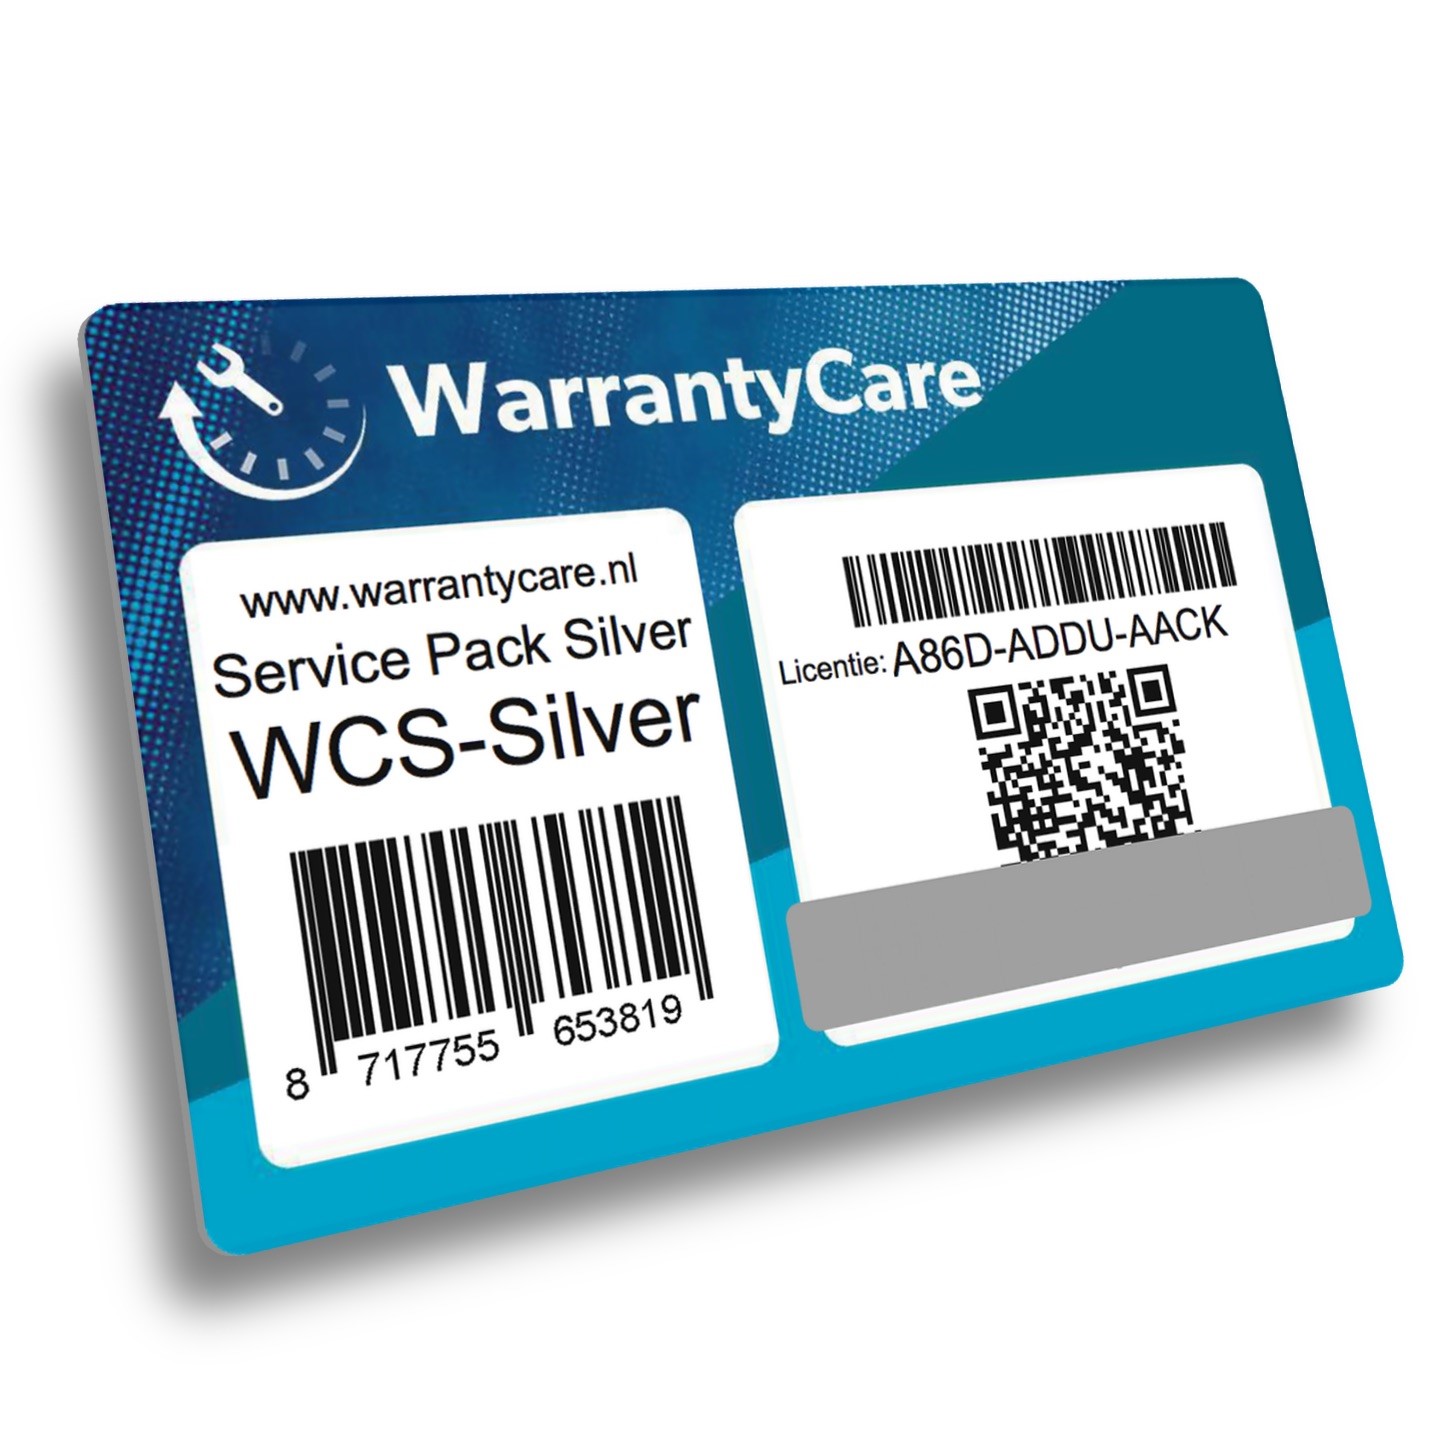 Warrantycare Service Pack G level Silver